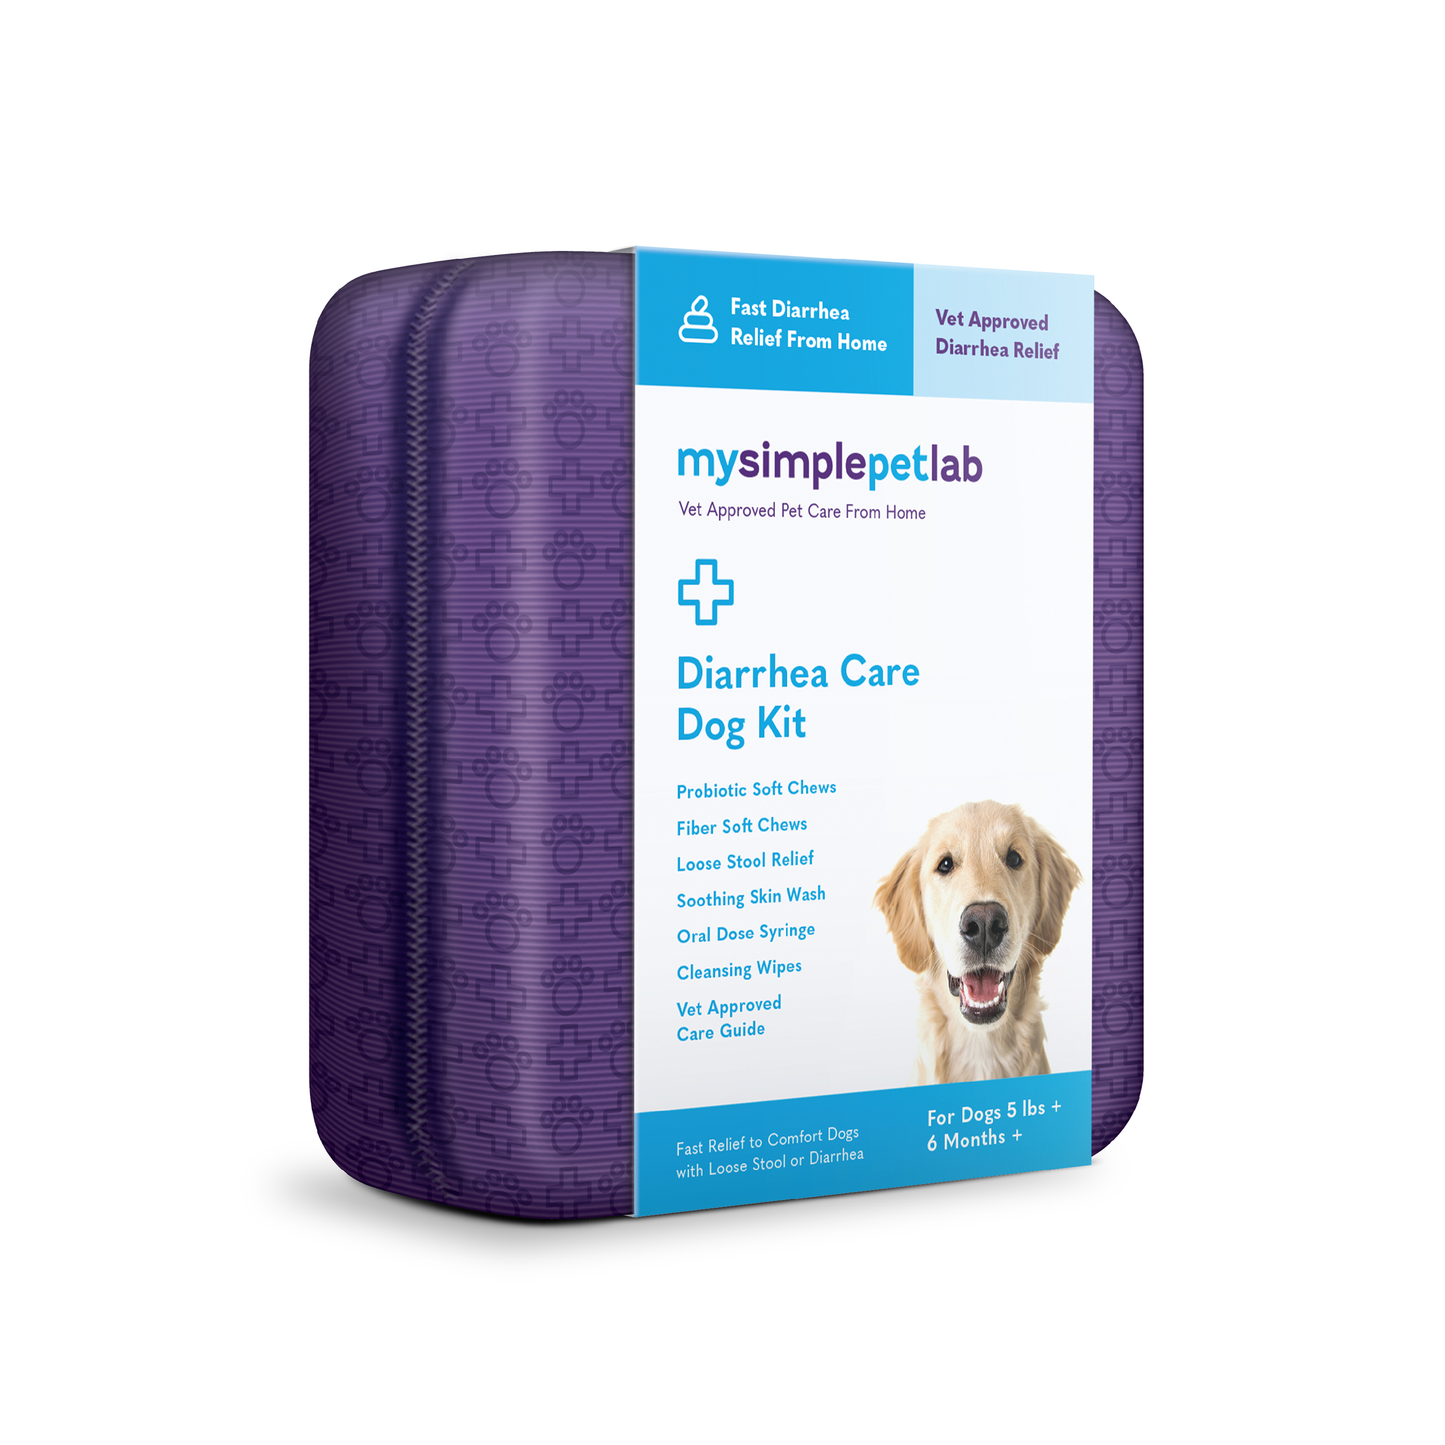 Diarrhea Care Dog Kit